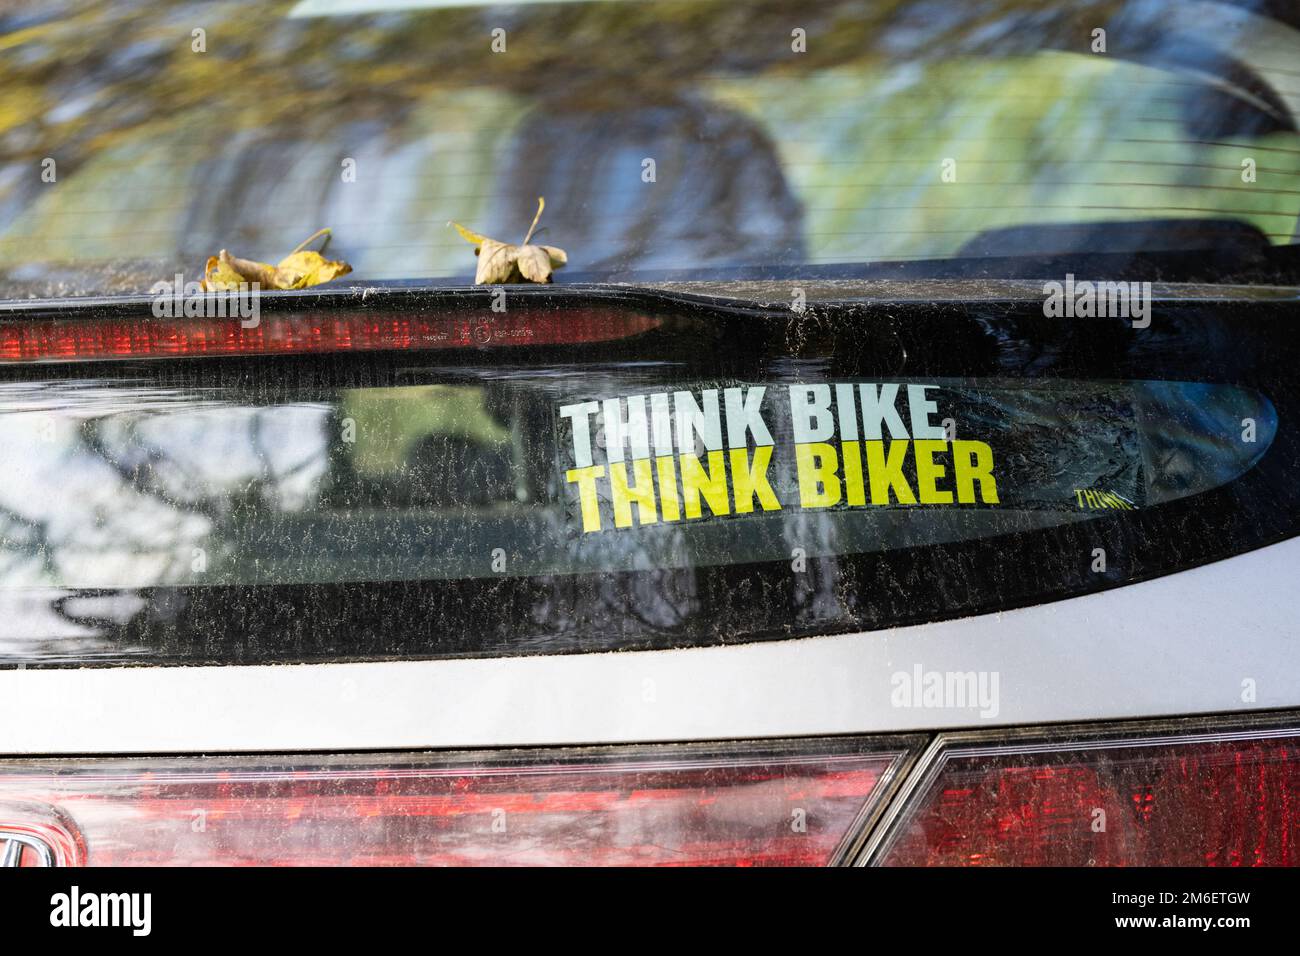 Think Bike Think Biker sticker on car rear windscreen - UK Stock Photo